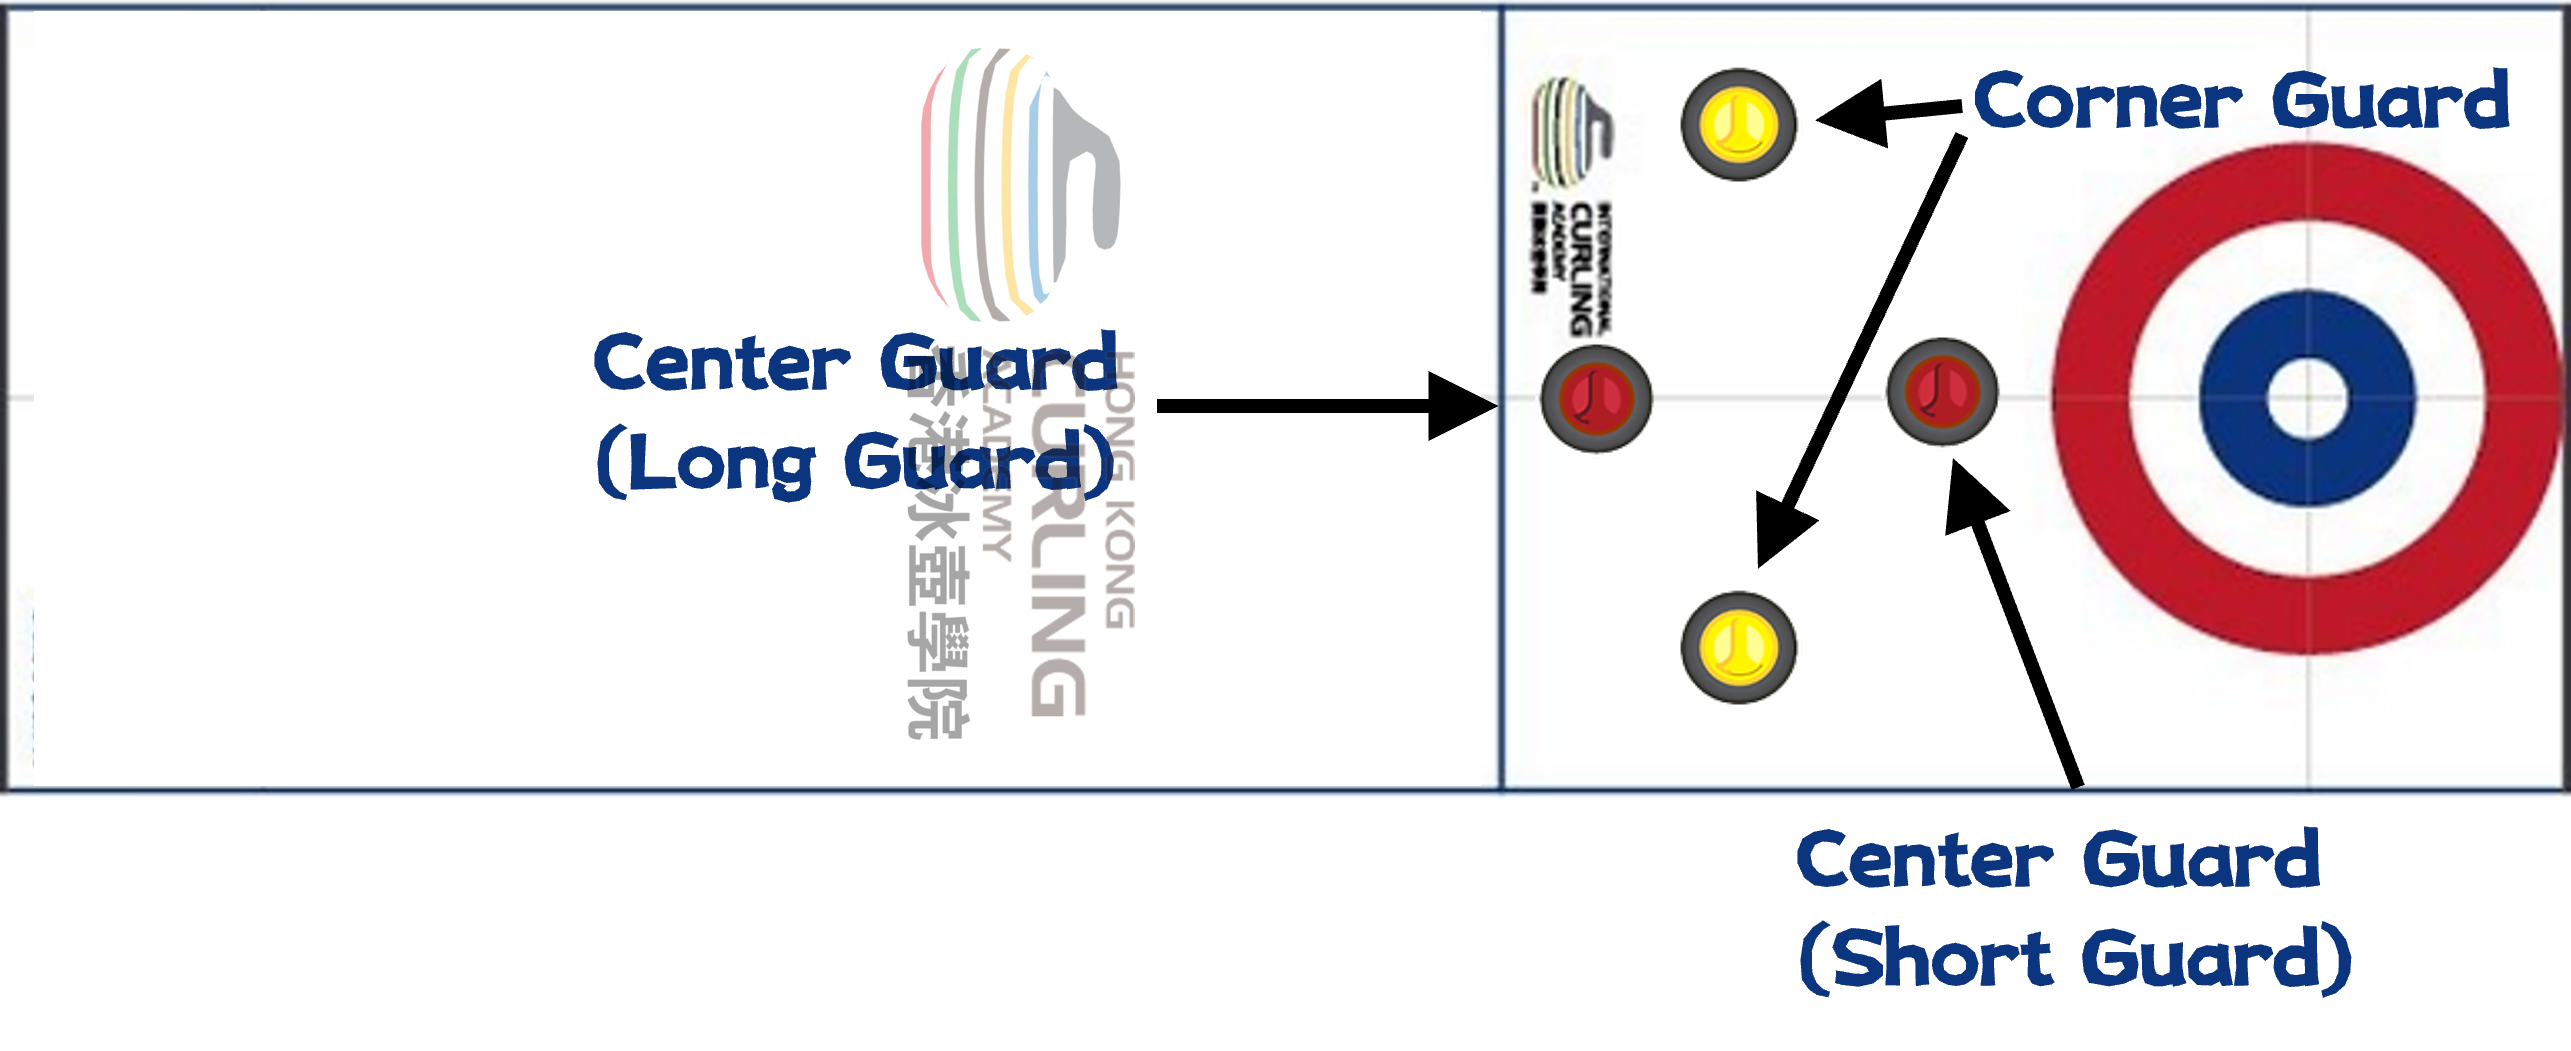 冰壺比賽中的Center Guard 與 Corner Guard